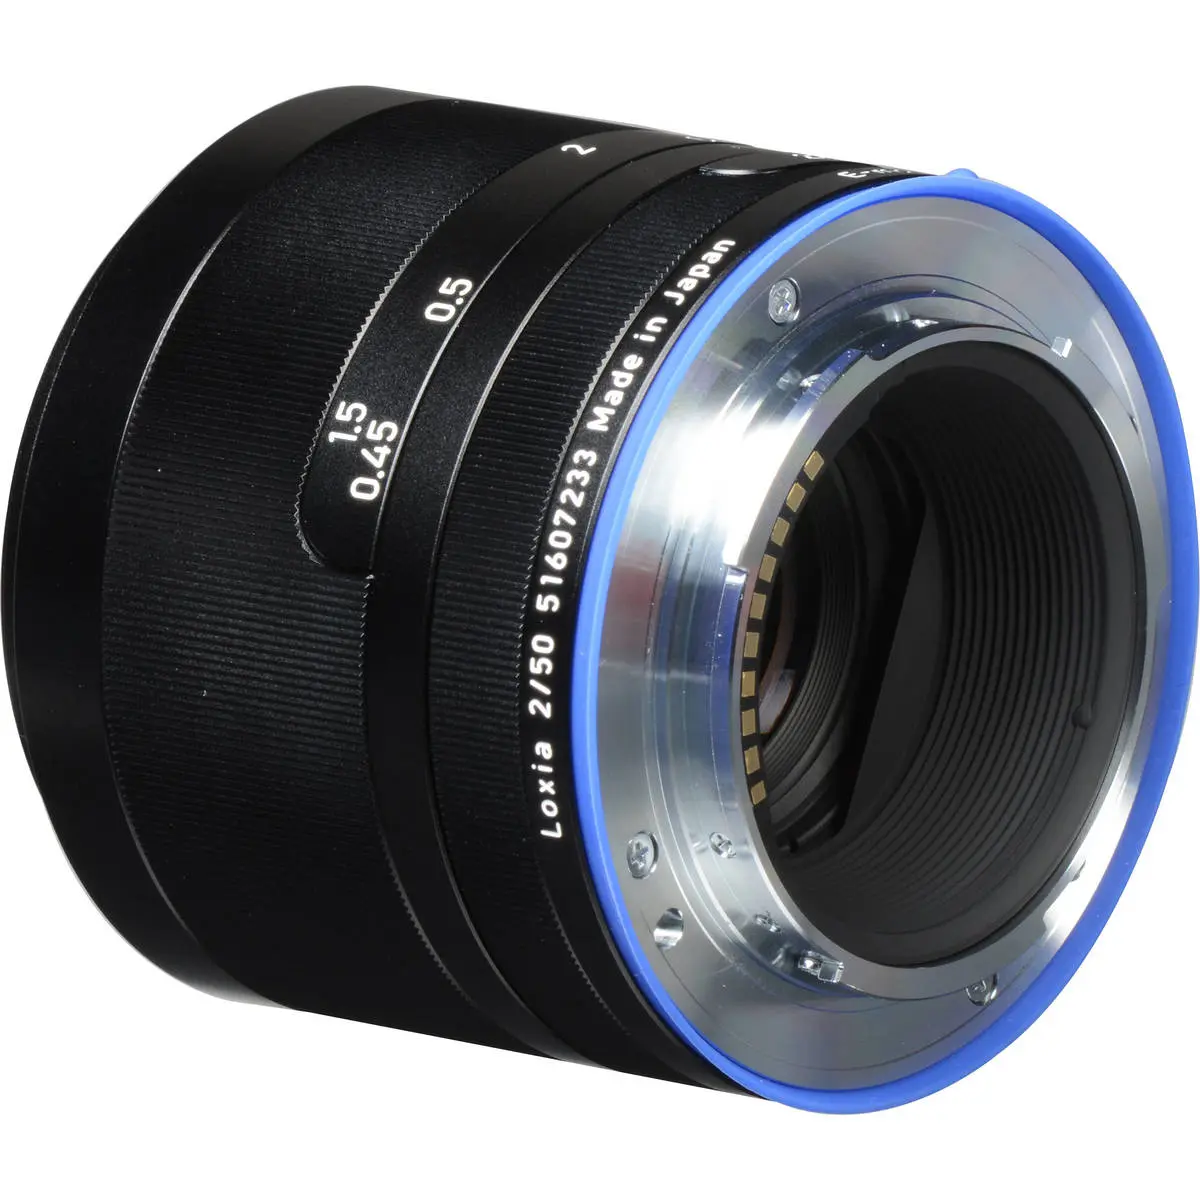 8. Carl Zeiss Loxia 50mm f/2 Planar T* (Sony E-Mount) Lens